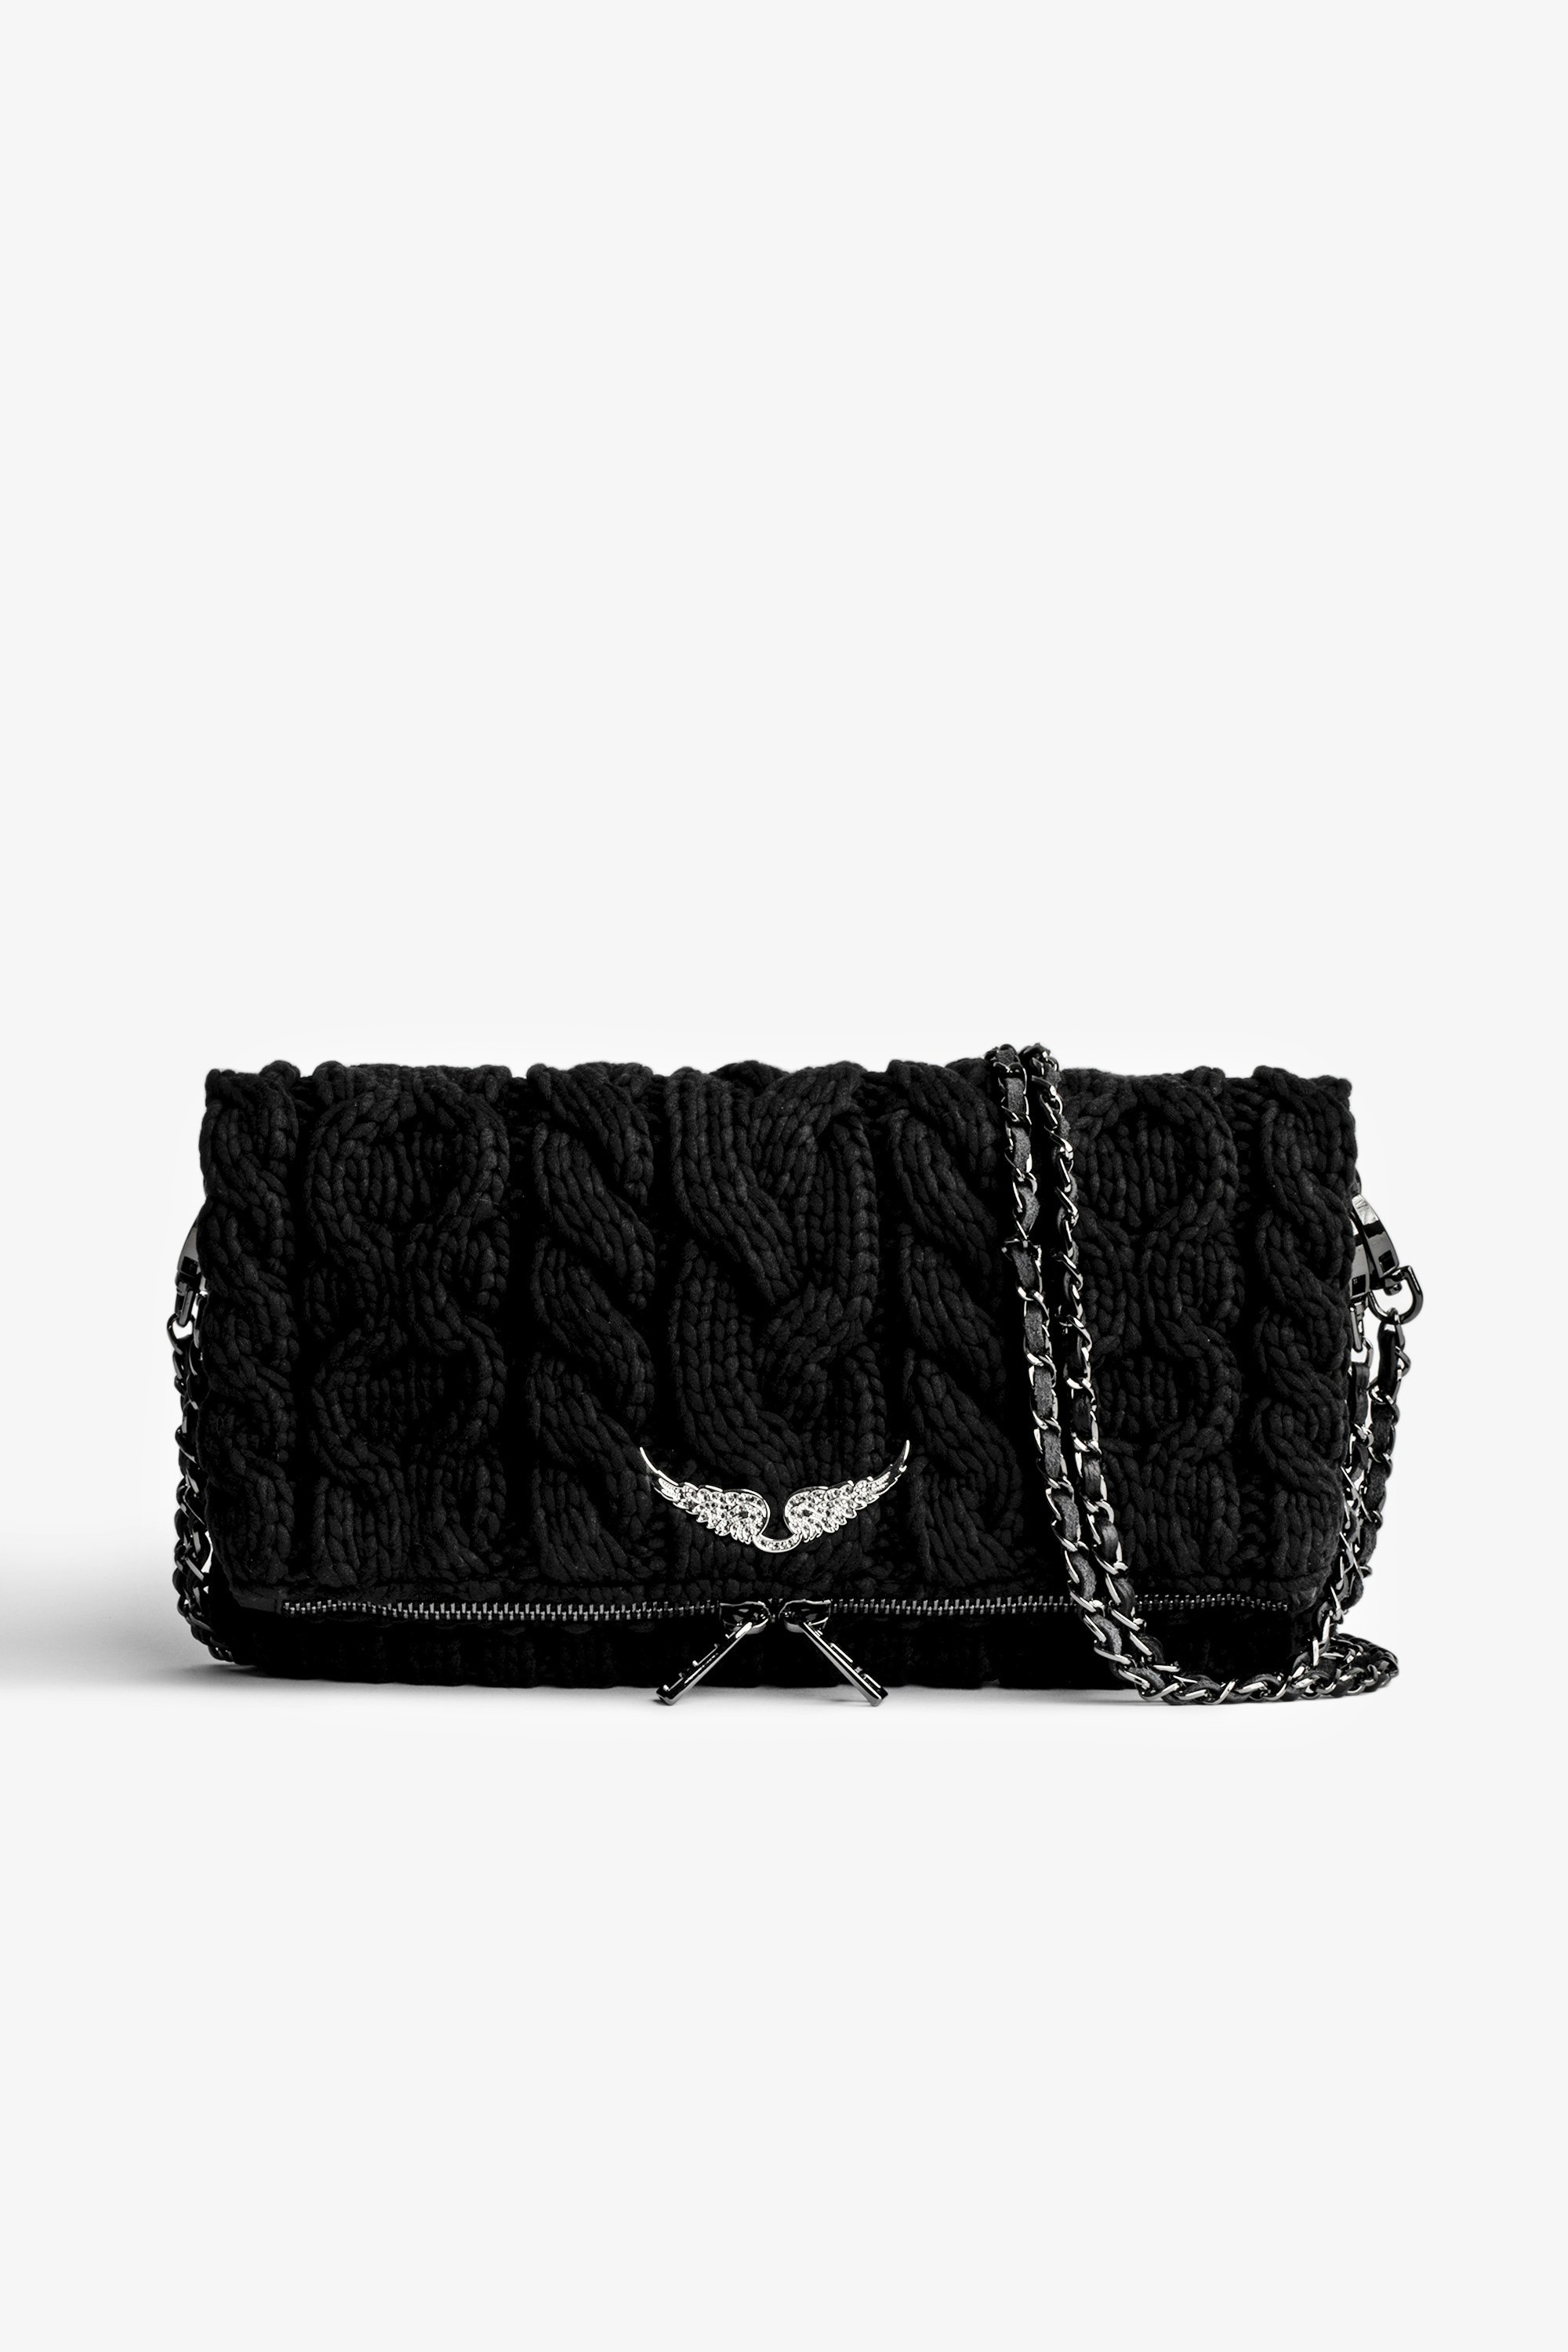 Rock Clutch Women's black knit cotton clutch bag